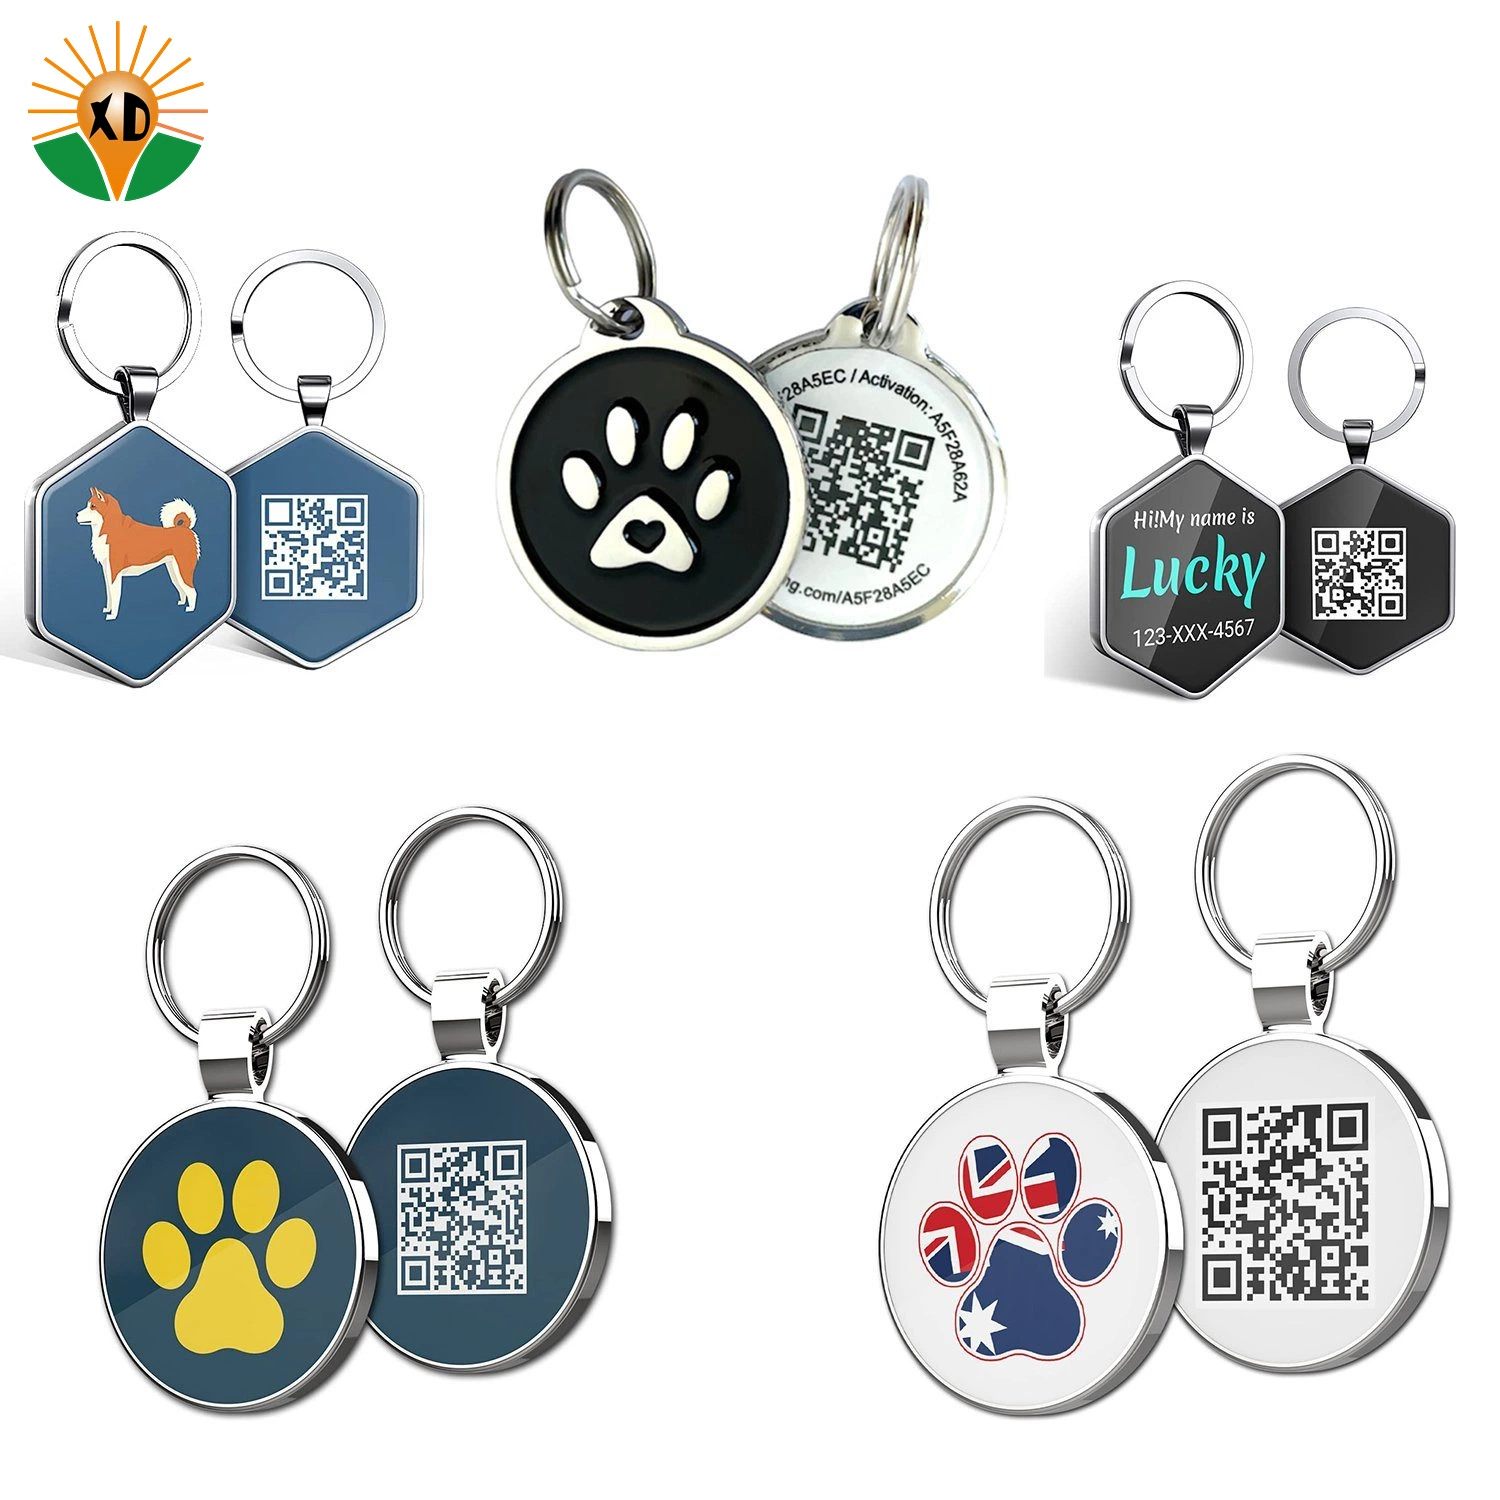 Hochwertige Haustier ID Identifikation Hund Dekoration Tags Drucken Custom Form Text NFC QR Code Metall Haustier ID Tag Hund Tags mit QR-Code